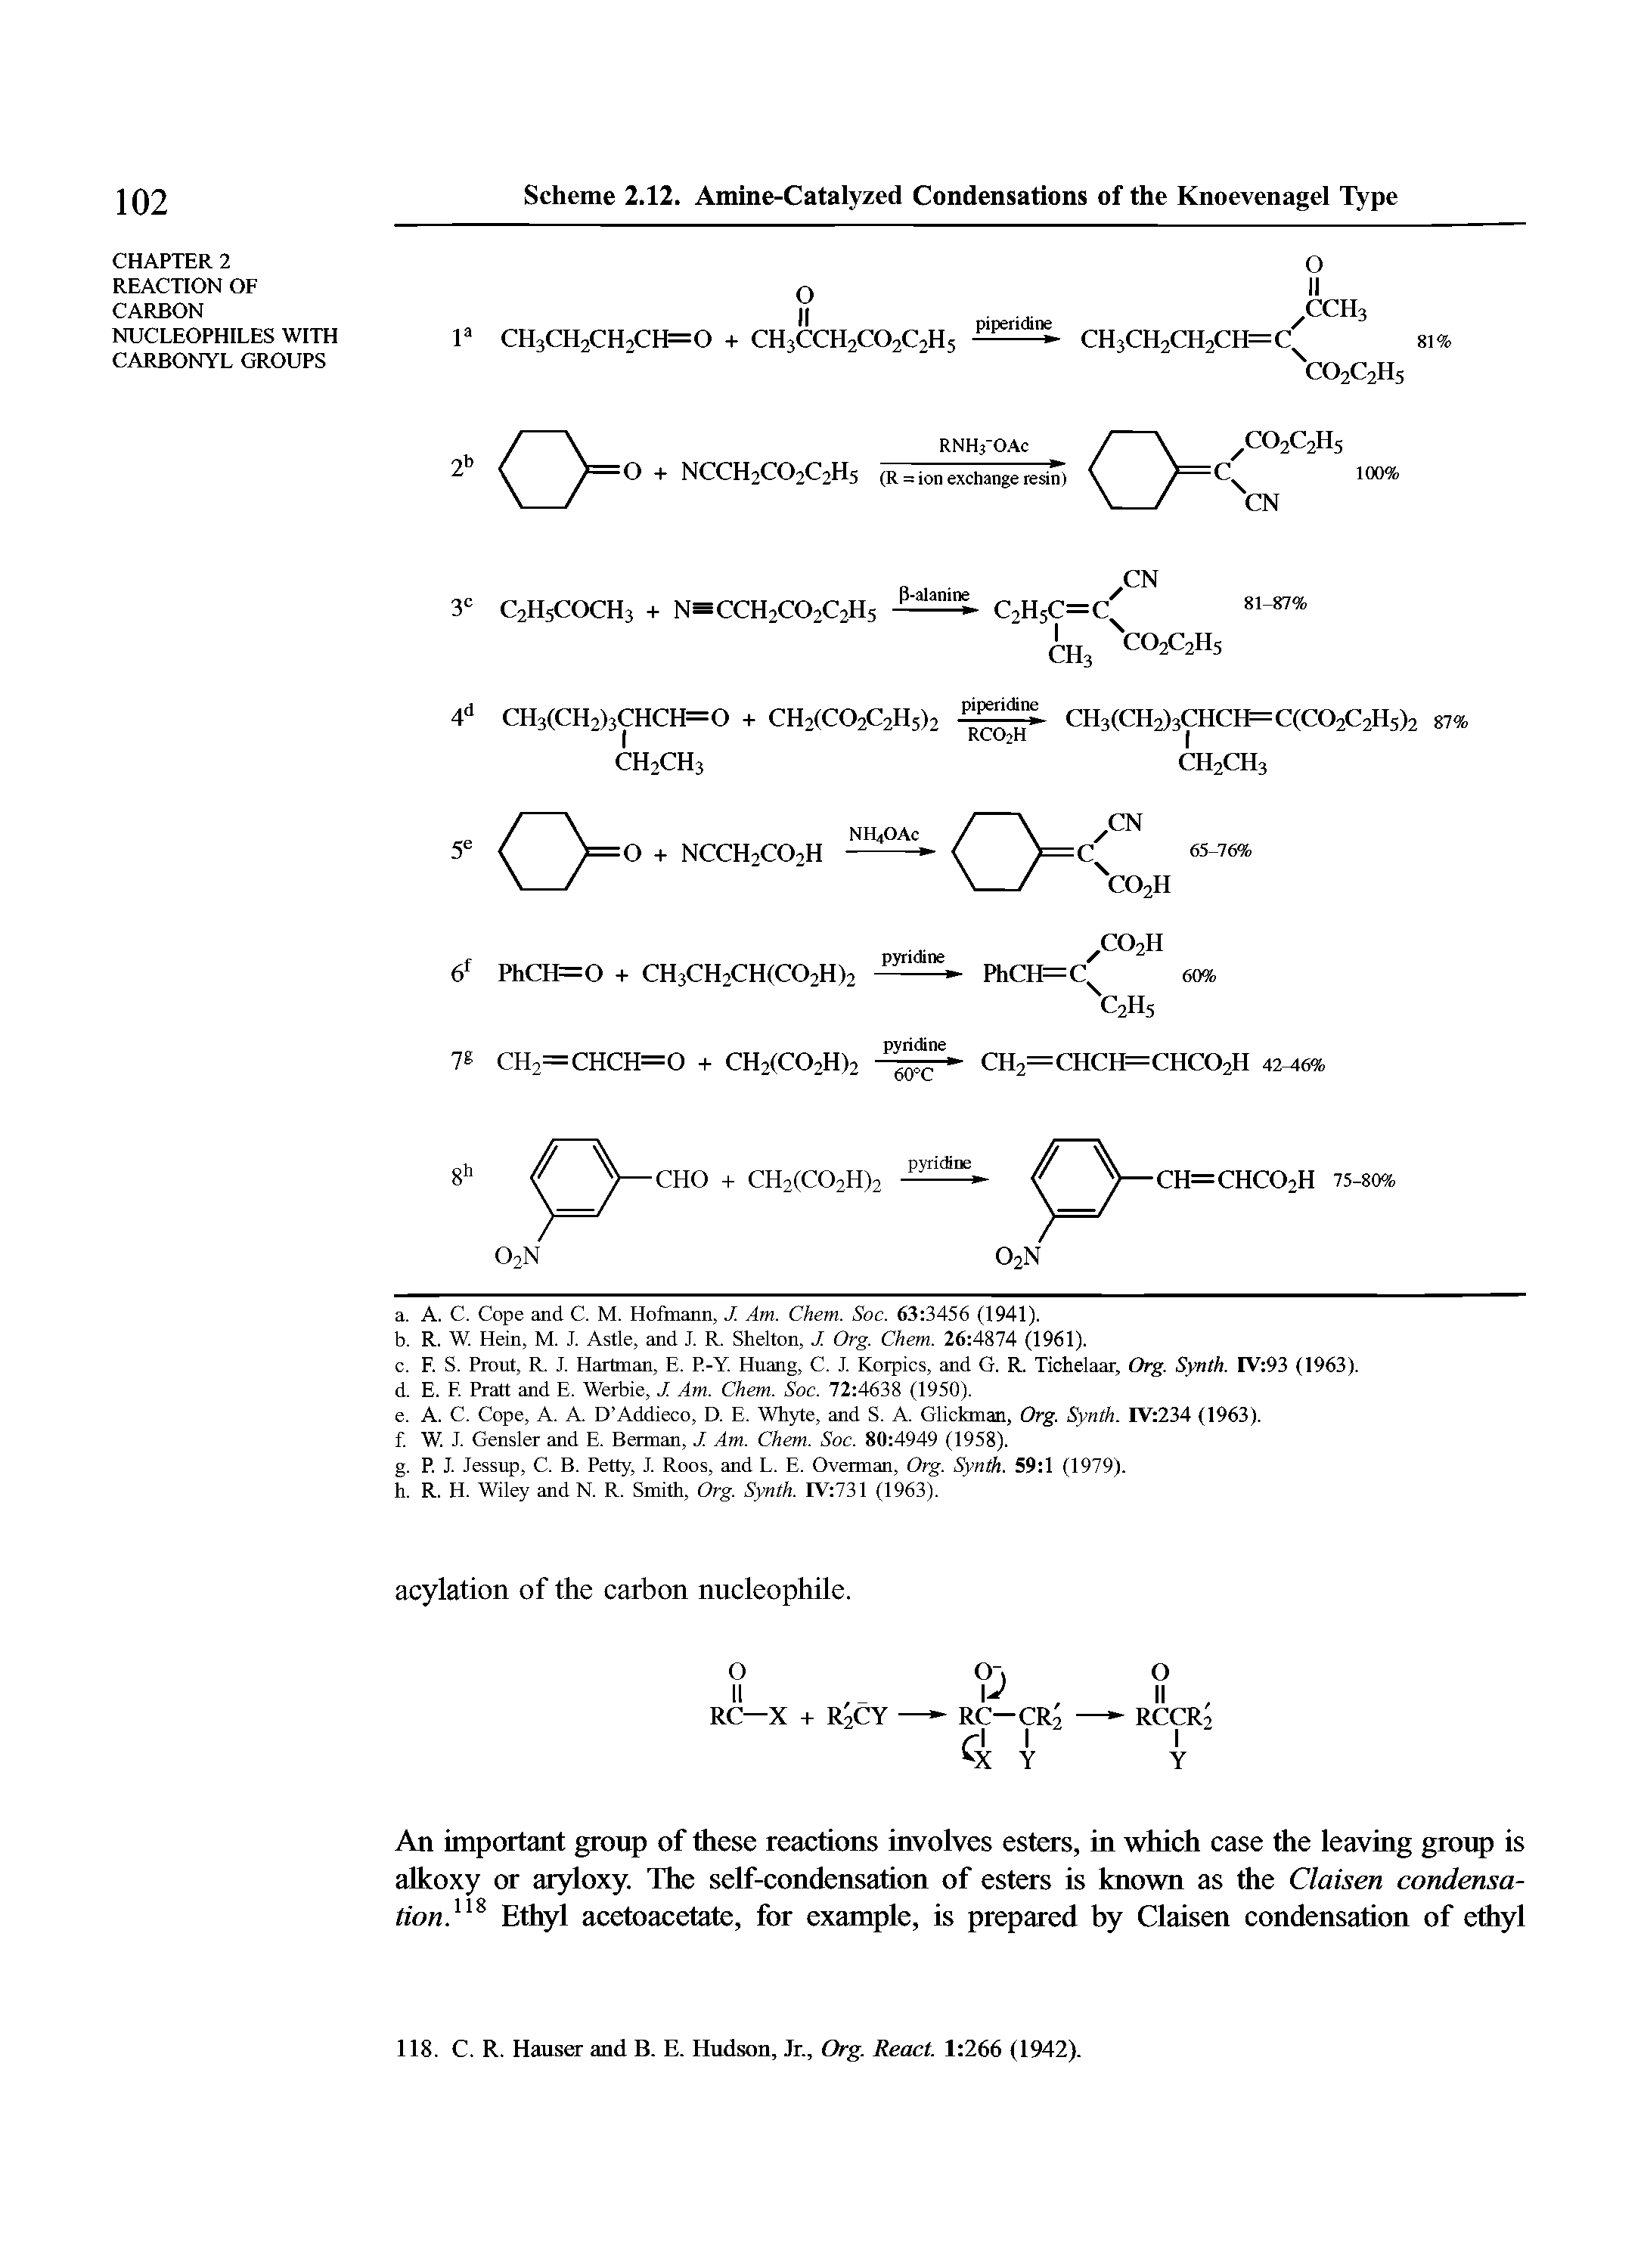 Scheme 2.12. Amine-Catalyzed Condensations of the Knoevenagel Type...